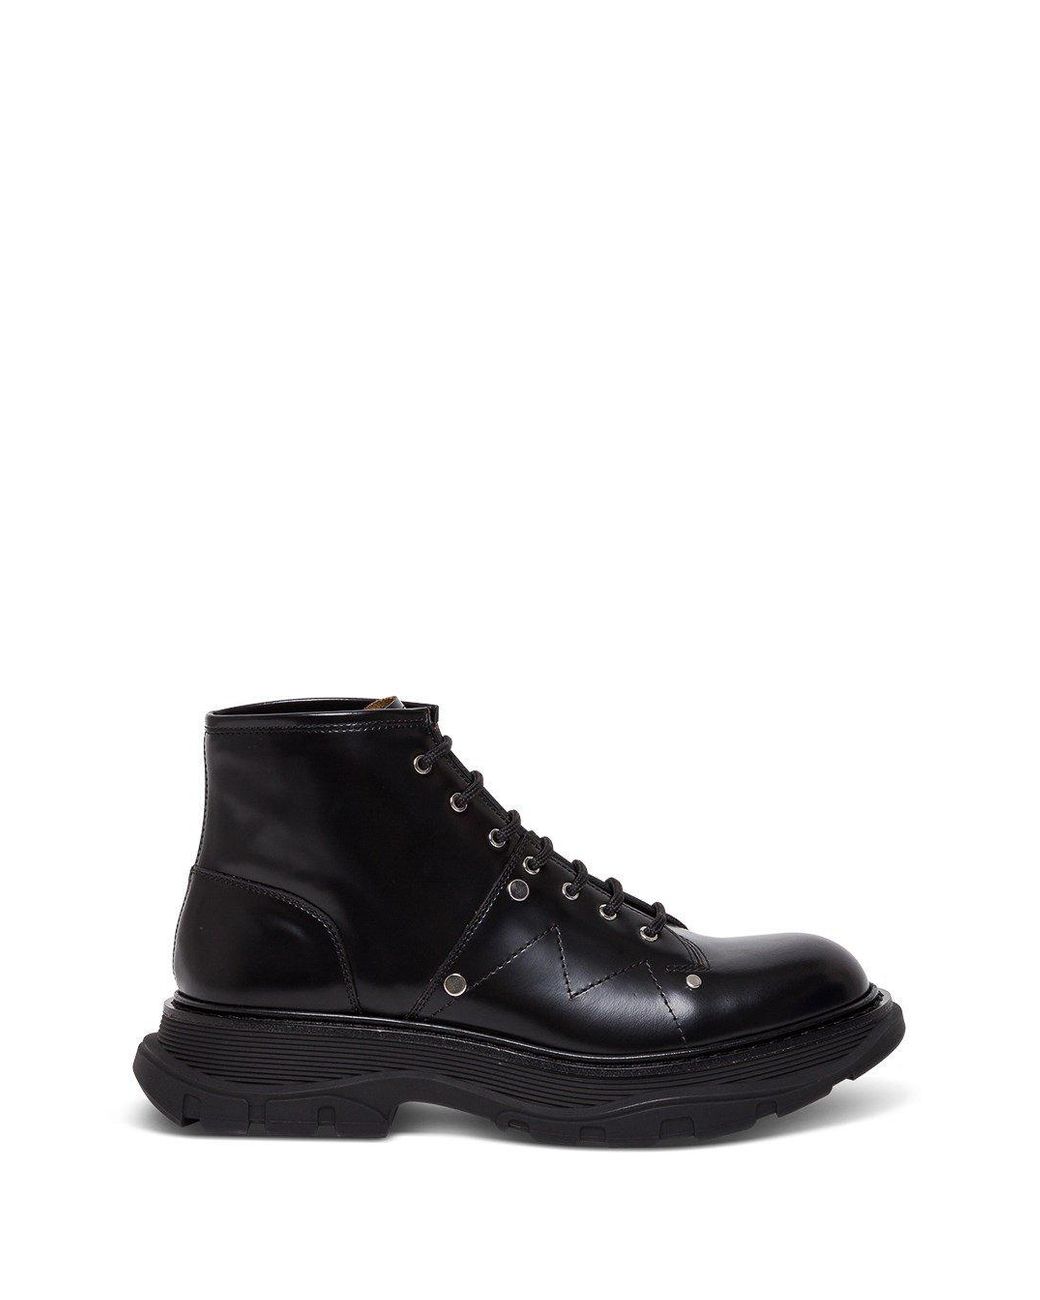 Alexander McQueen Tread Boots In Black Leather for Men - Lyst